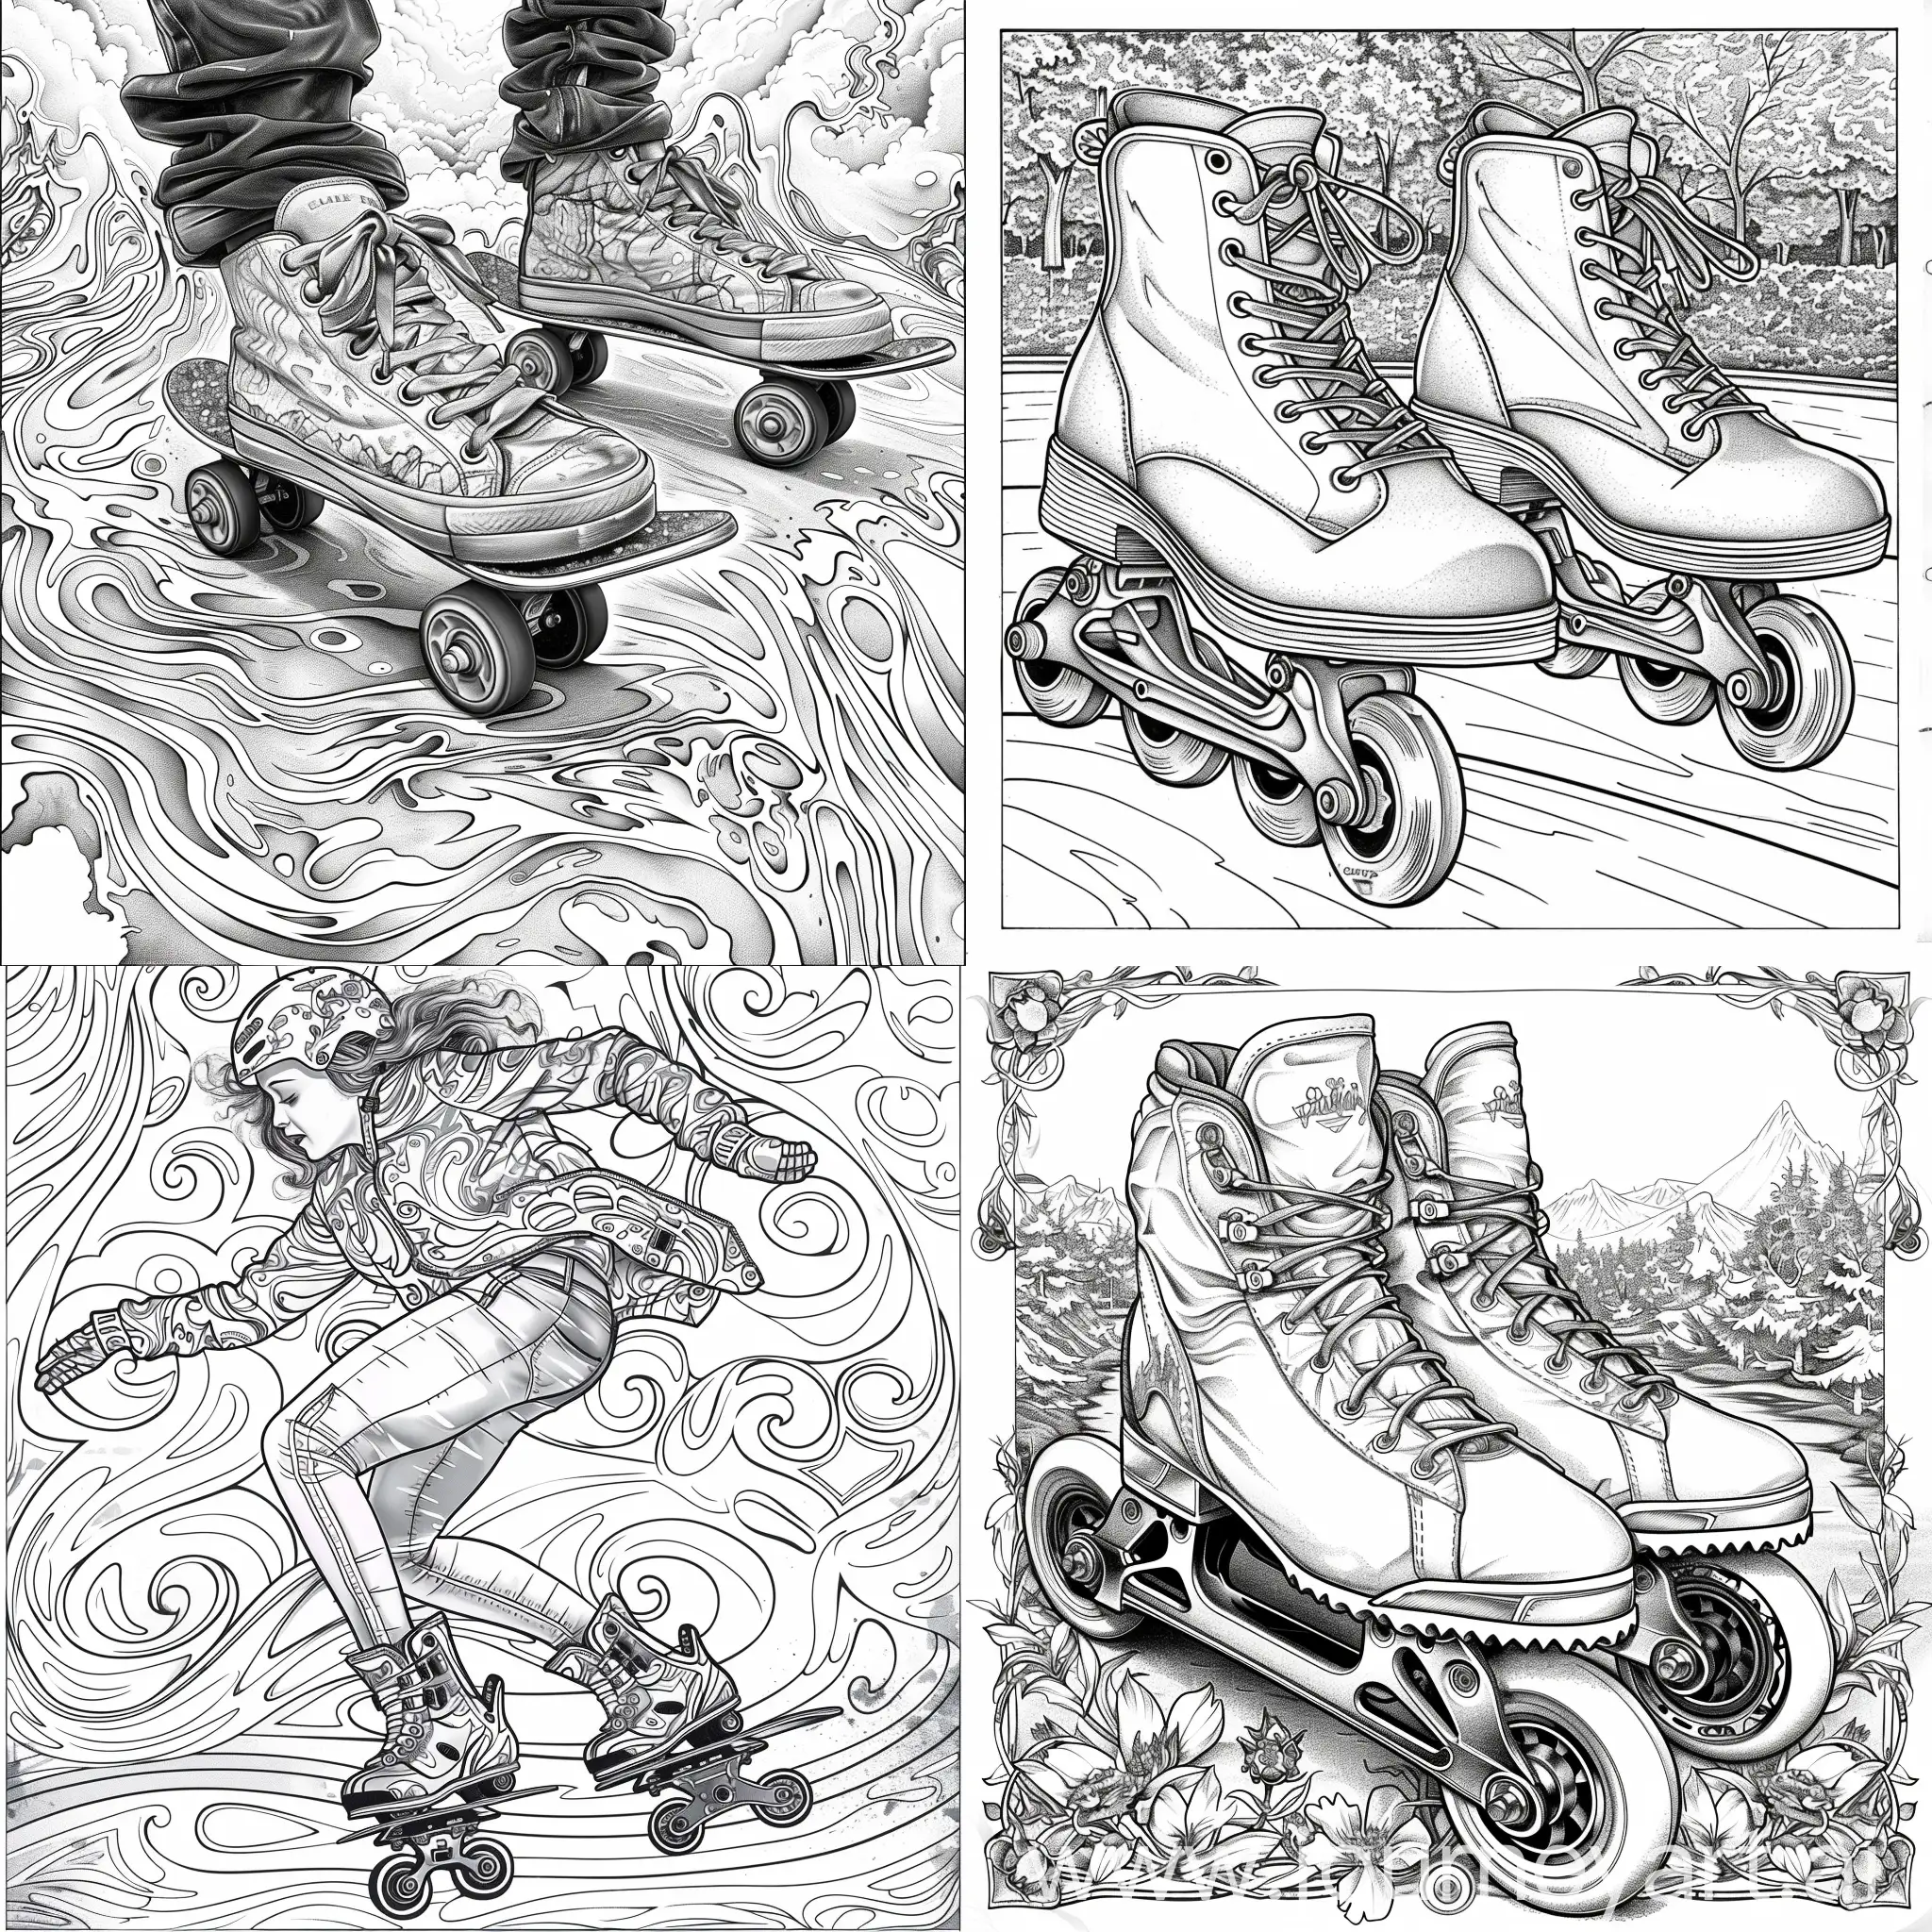 Coloring book rollering skate